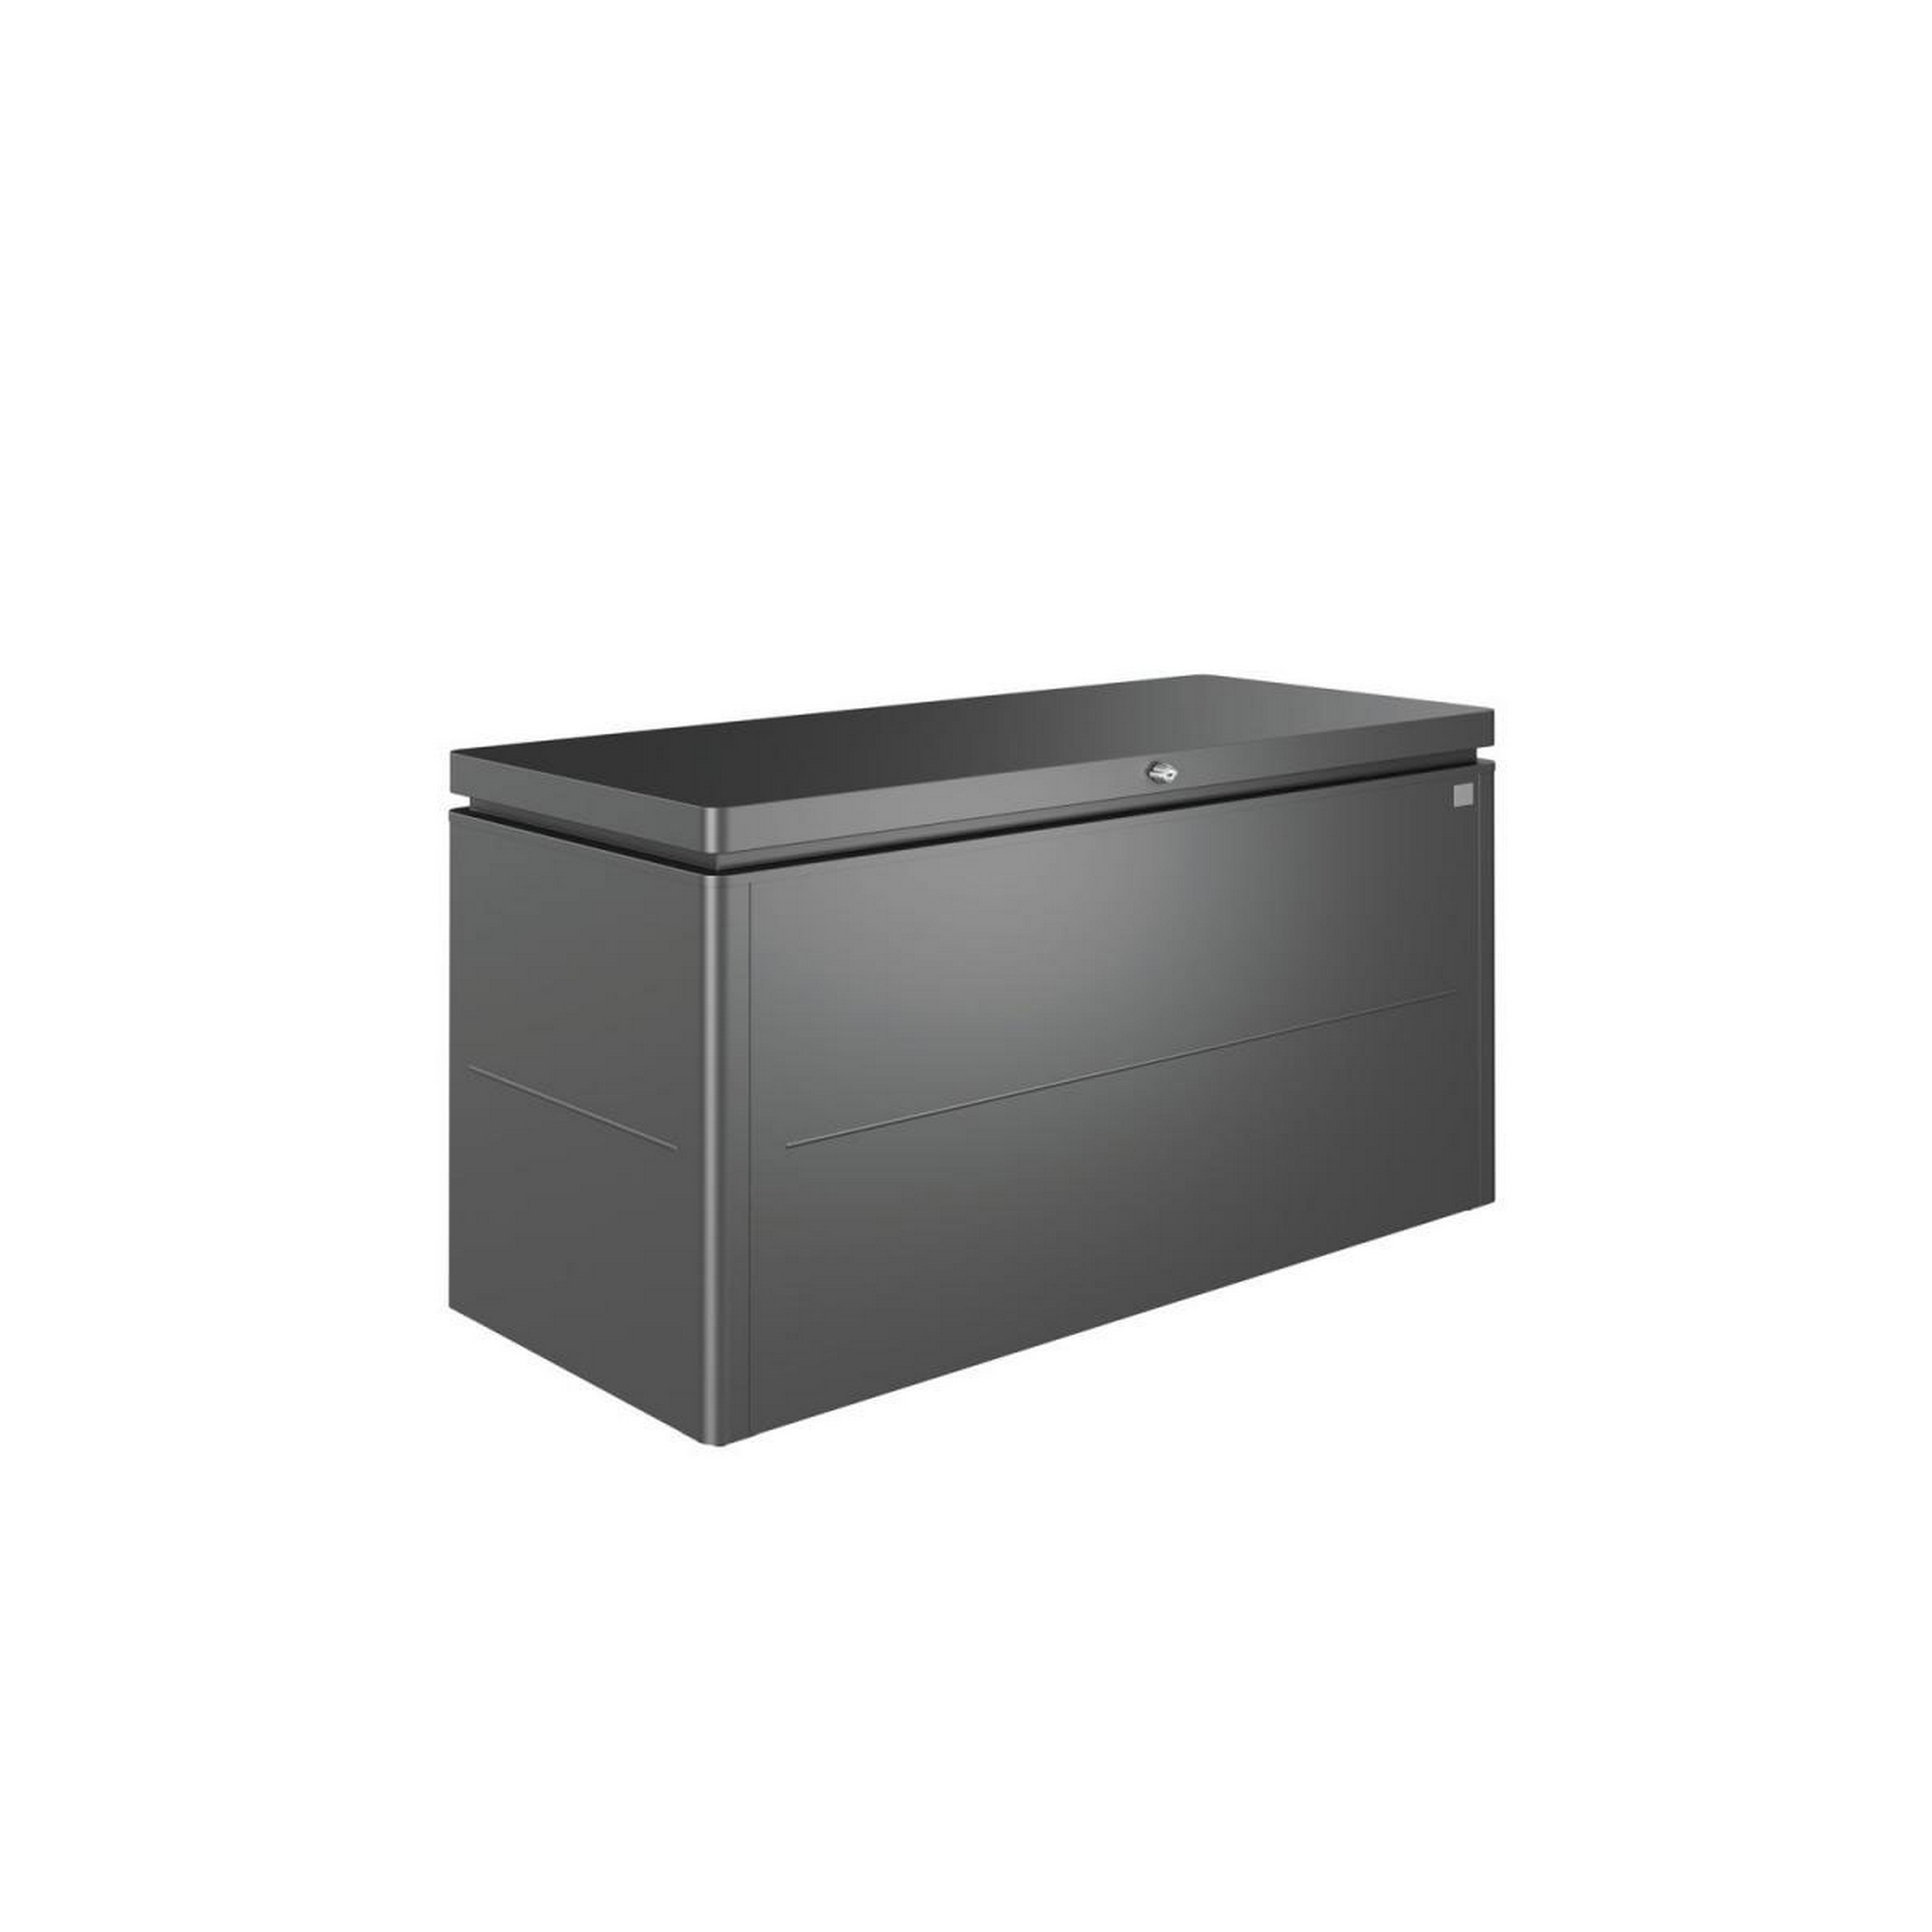 Aufbewahrungsbox 'LoungeBox 160' dunkelgrau metallic 160 x 70 x 83,5 cm + product picture